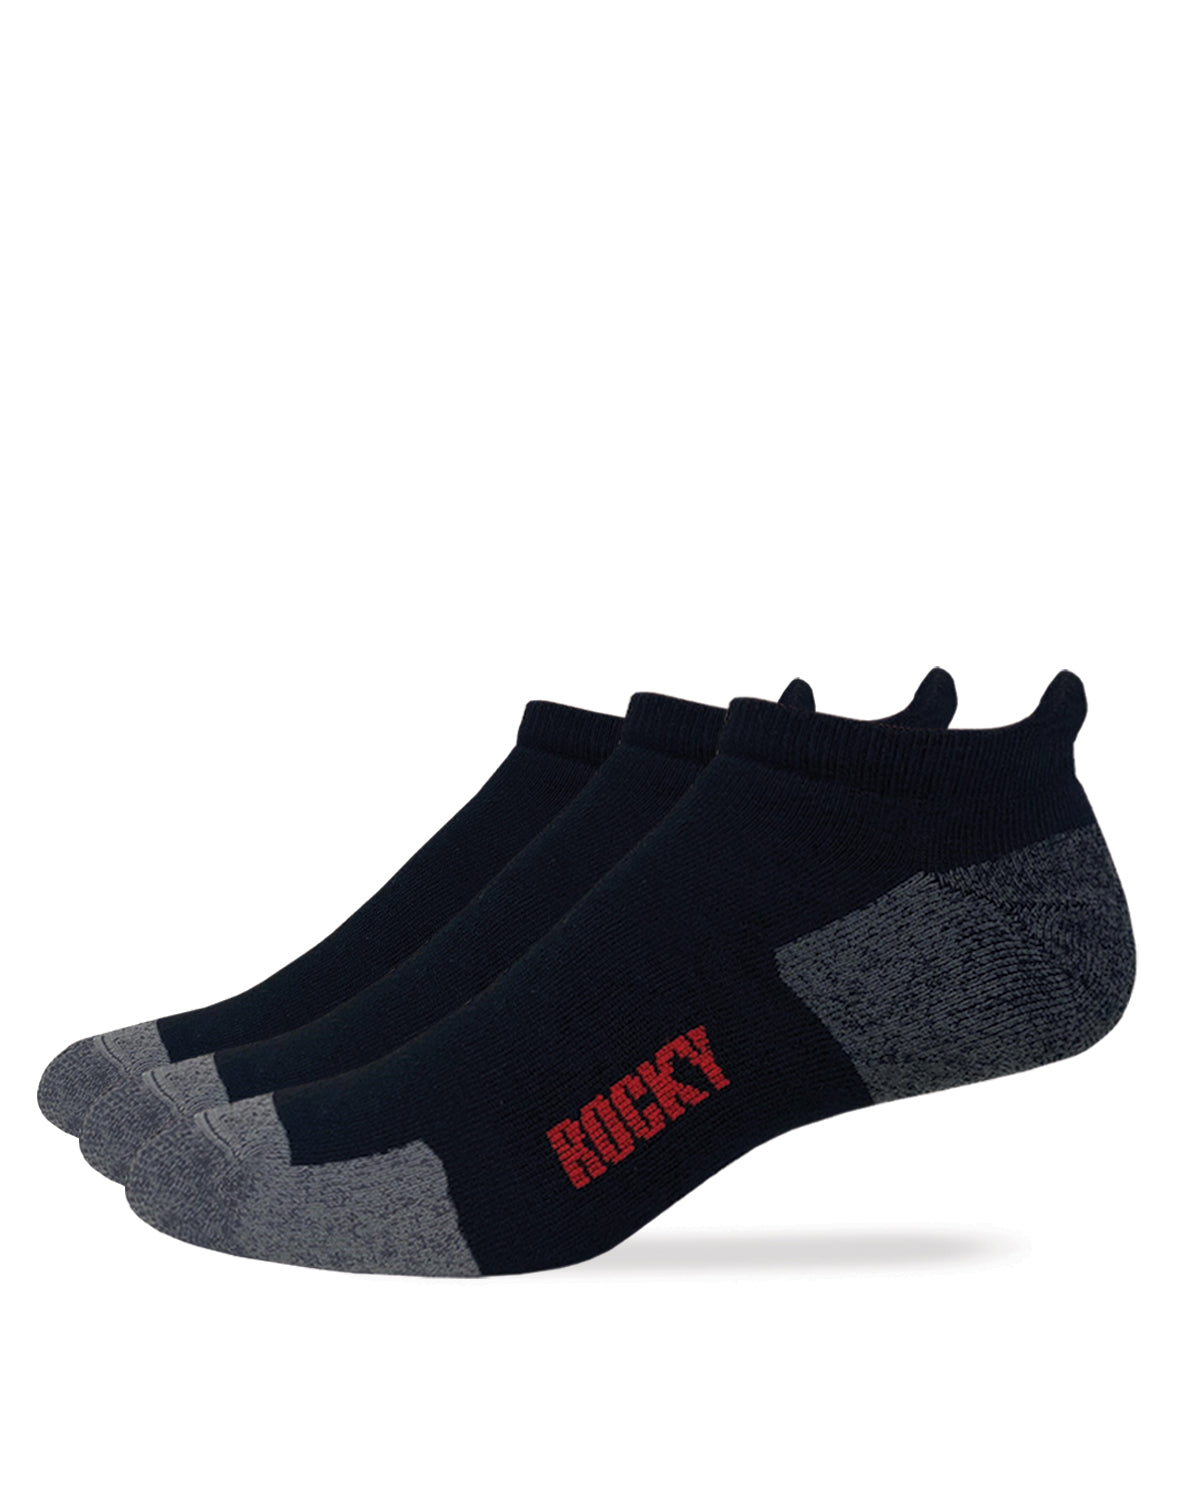 Rocky Mens Cotton Full Cushion Low Cut Heel Tab Socks 3 Pair Pack